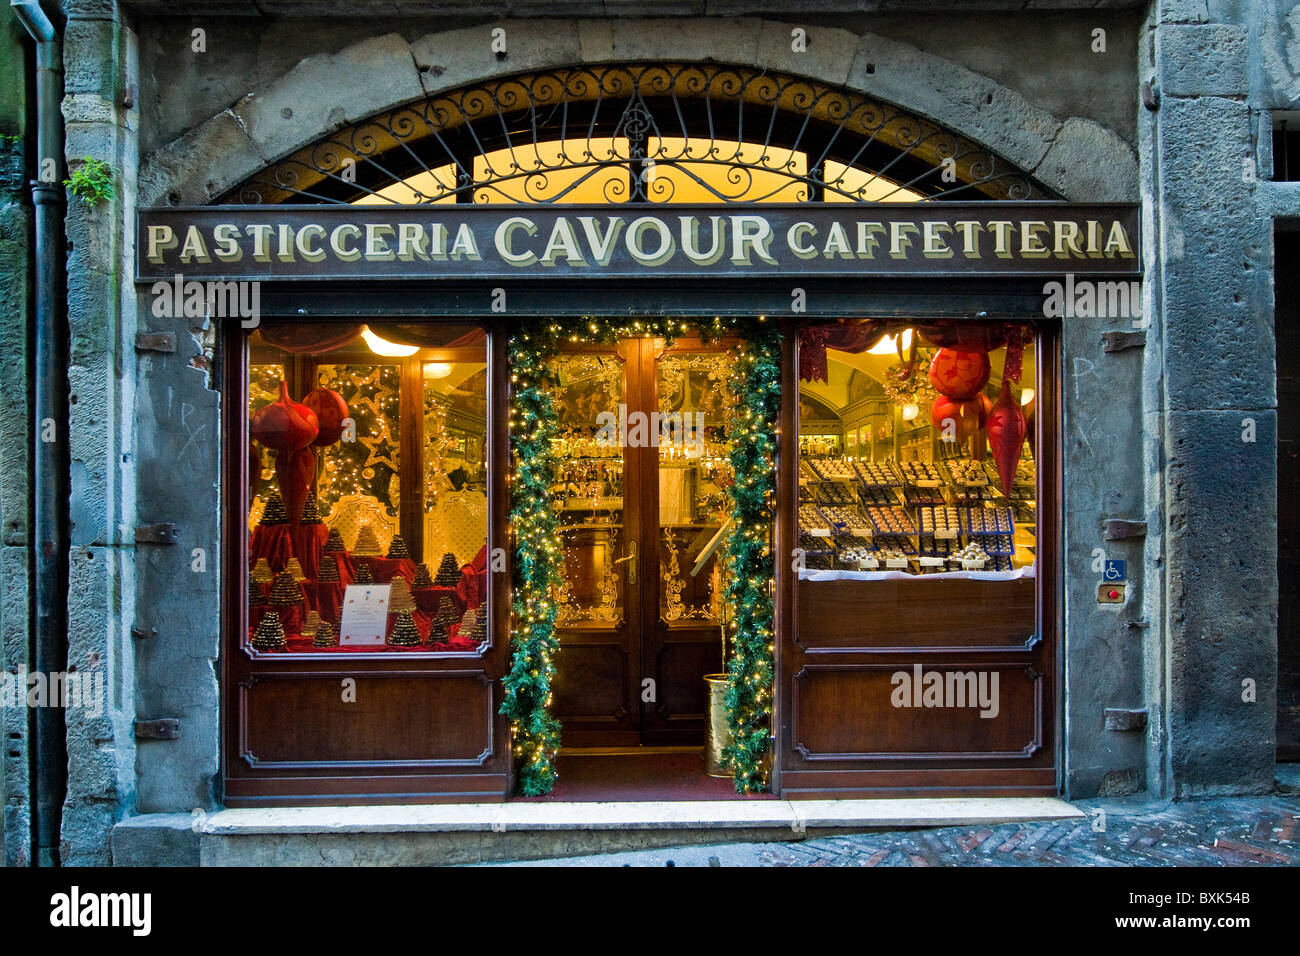 Pasticceria caffetteria Cavour, Bergamo, Italy Stock Photo - Alamy